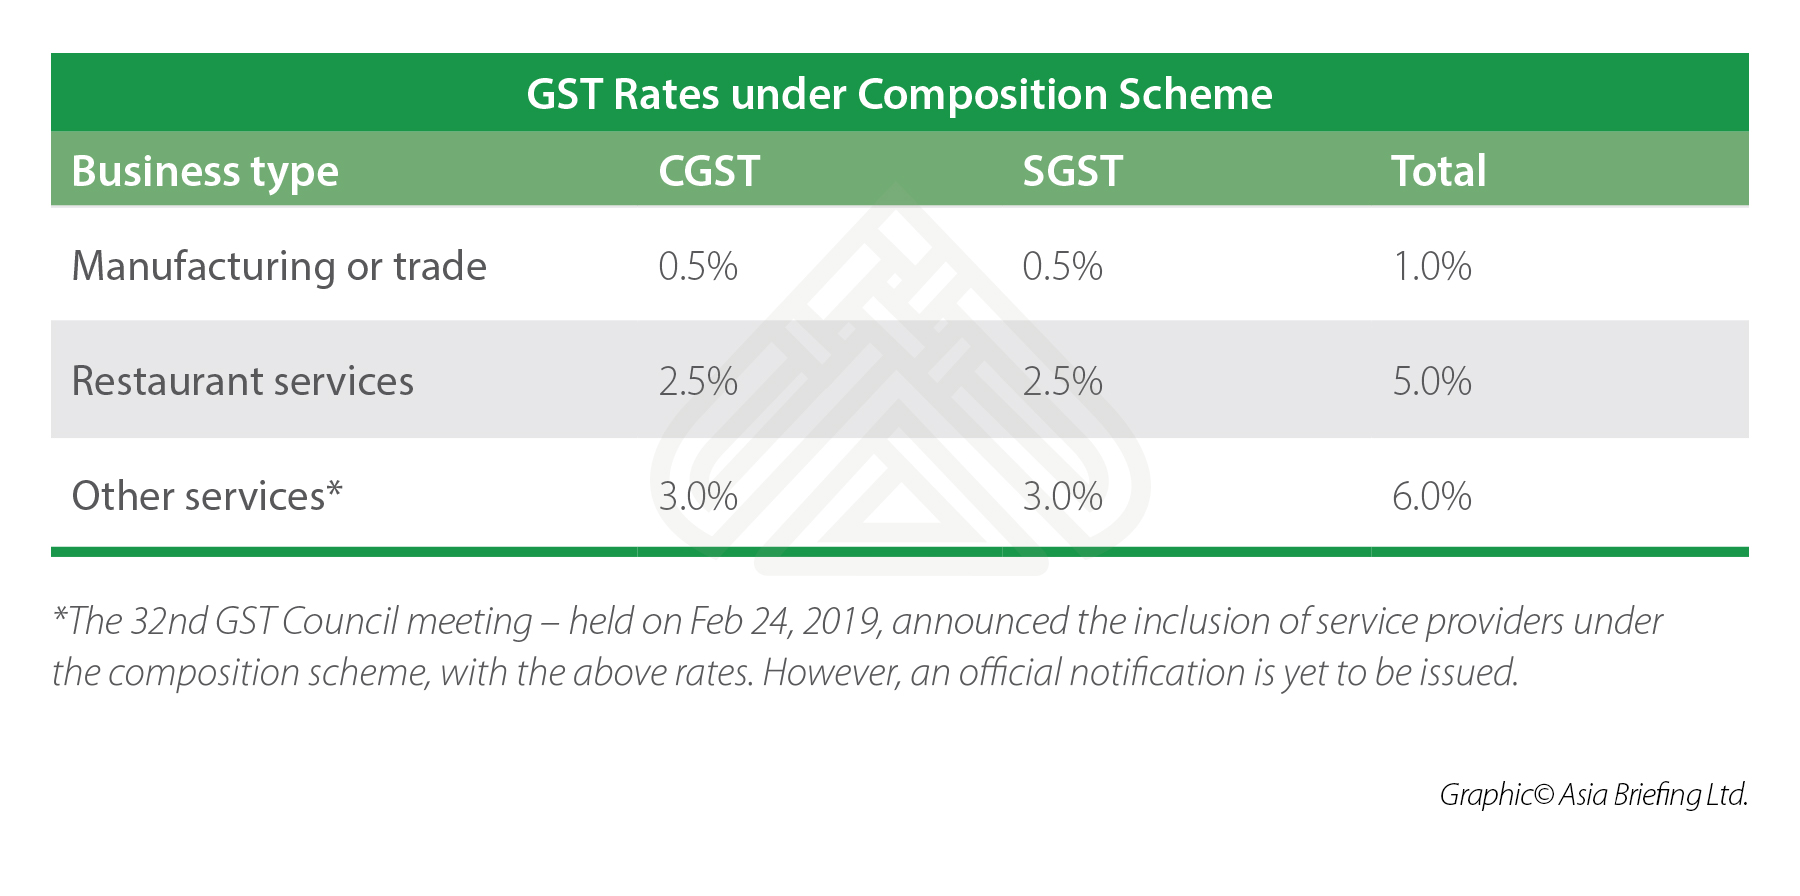 GST Rates under the Composition Scheme